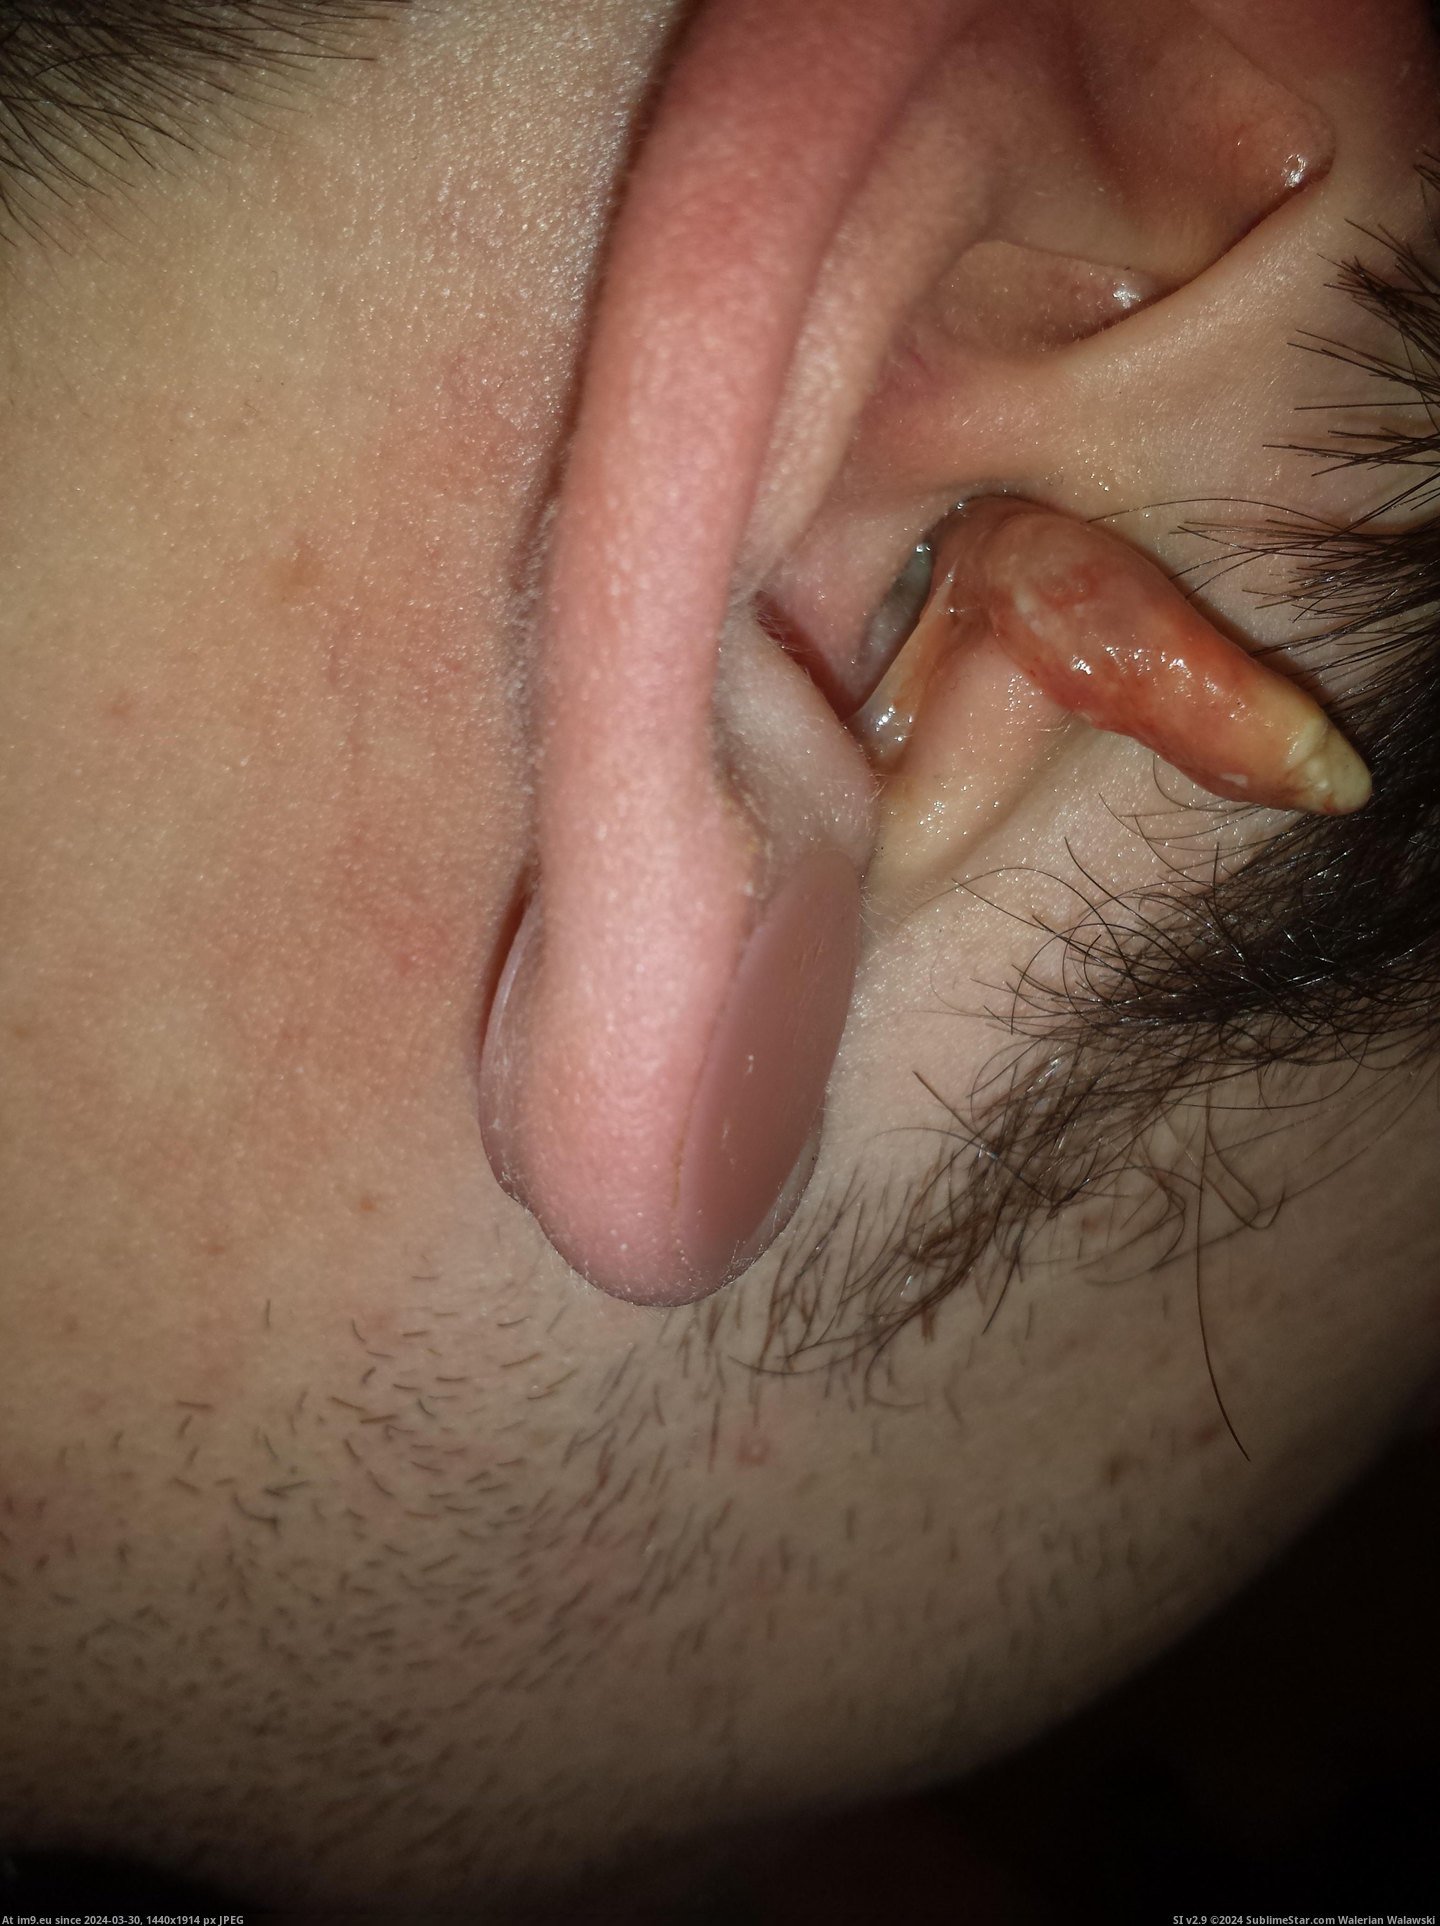 #Wtf #Ear #Infection #Crazy [Wtf] My crazy ear infection 6 Pic. (Bild von album My r/WTF favs))